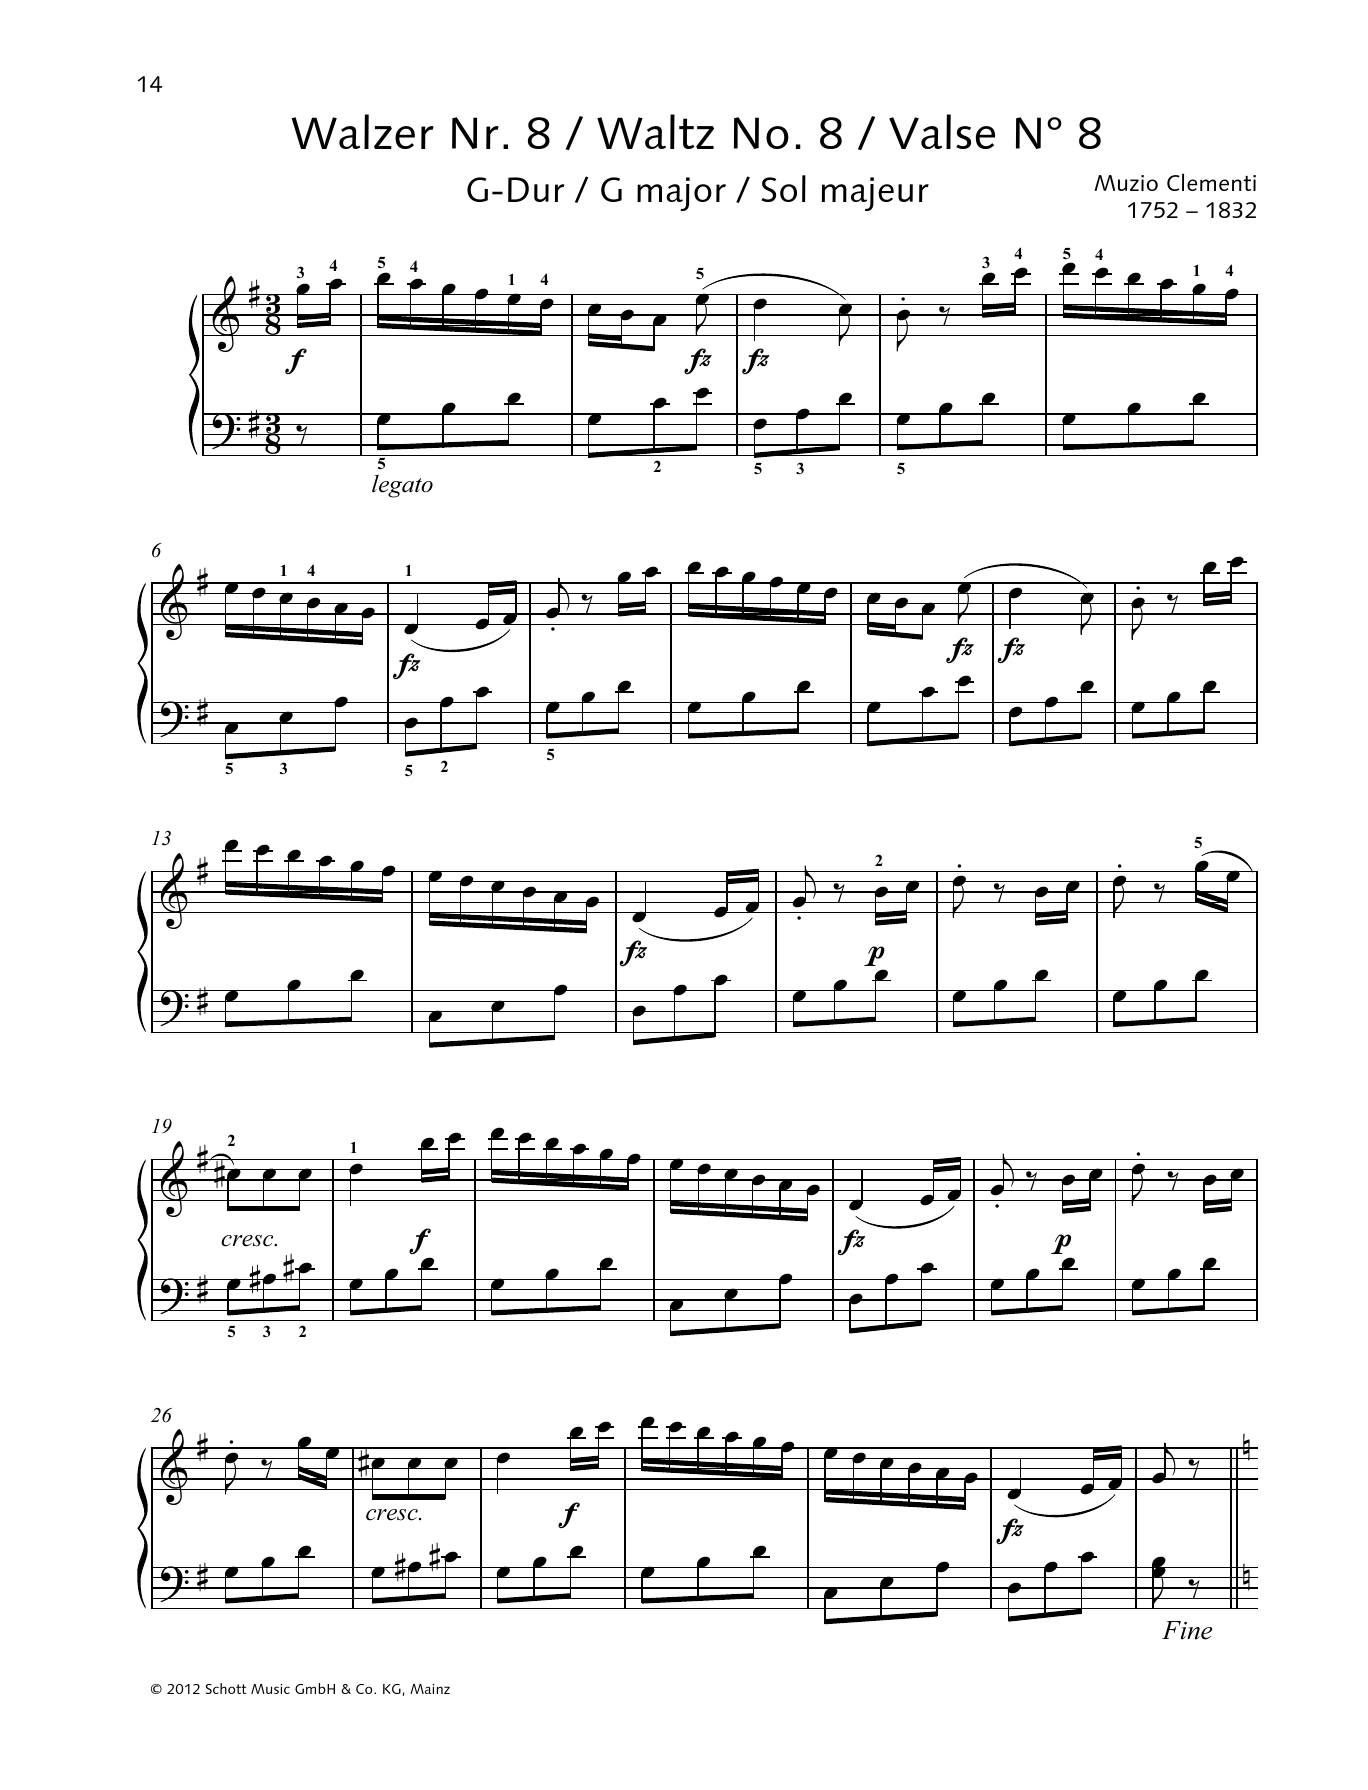 Muzio Clementi Waltz No. 8 G major Sheet Music Notes & Chords for Piano Solo - Download or Print PDF